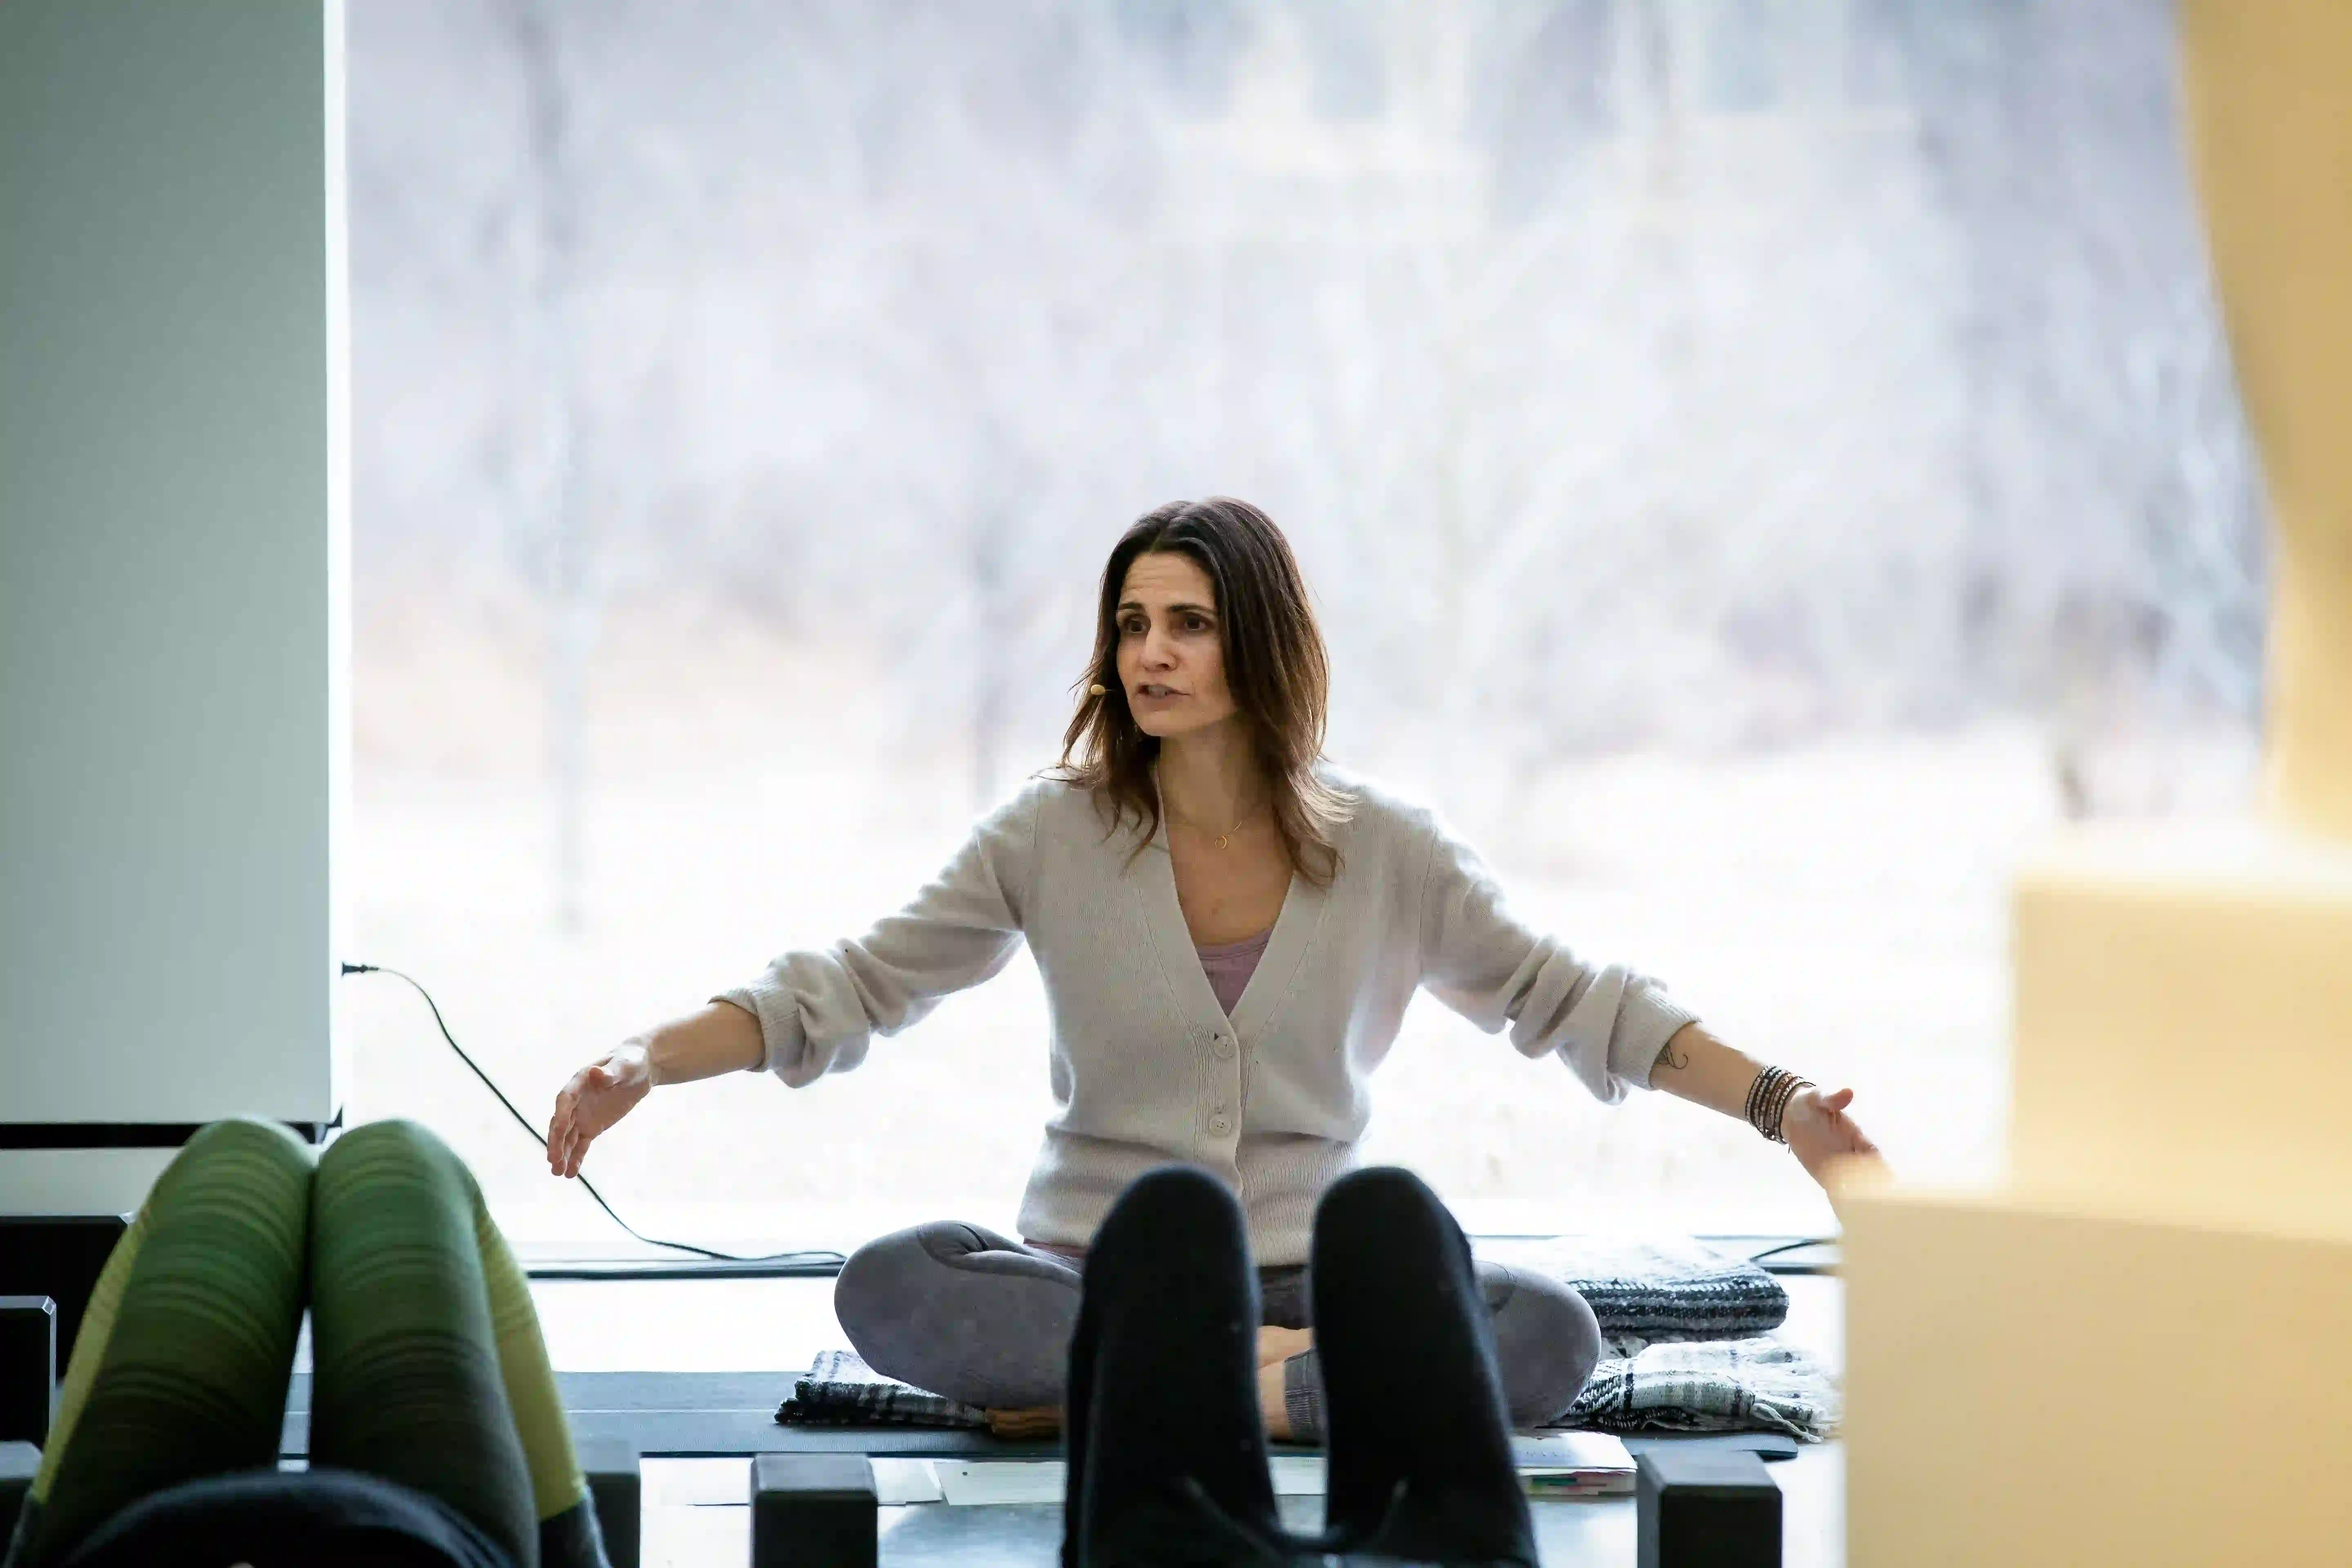 Yoga therapist, teacher, and author, Jillian Pransky leading Magazzino's Winter Wellness Workshop